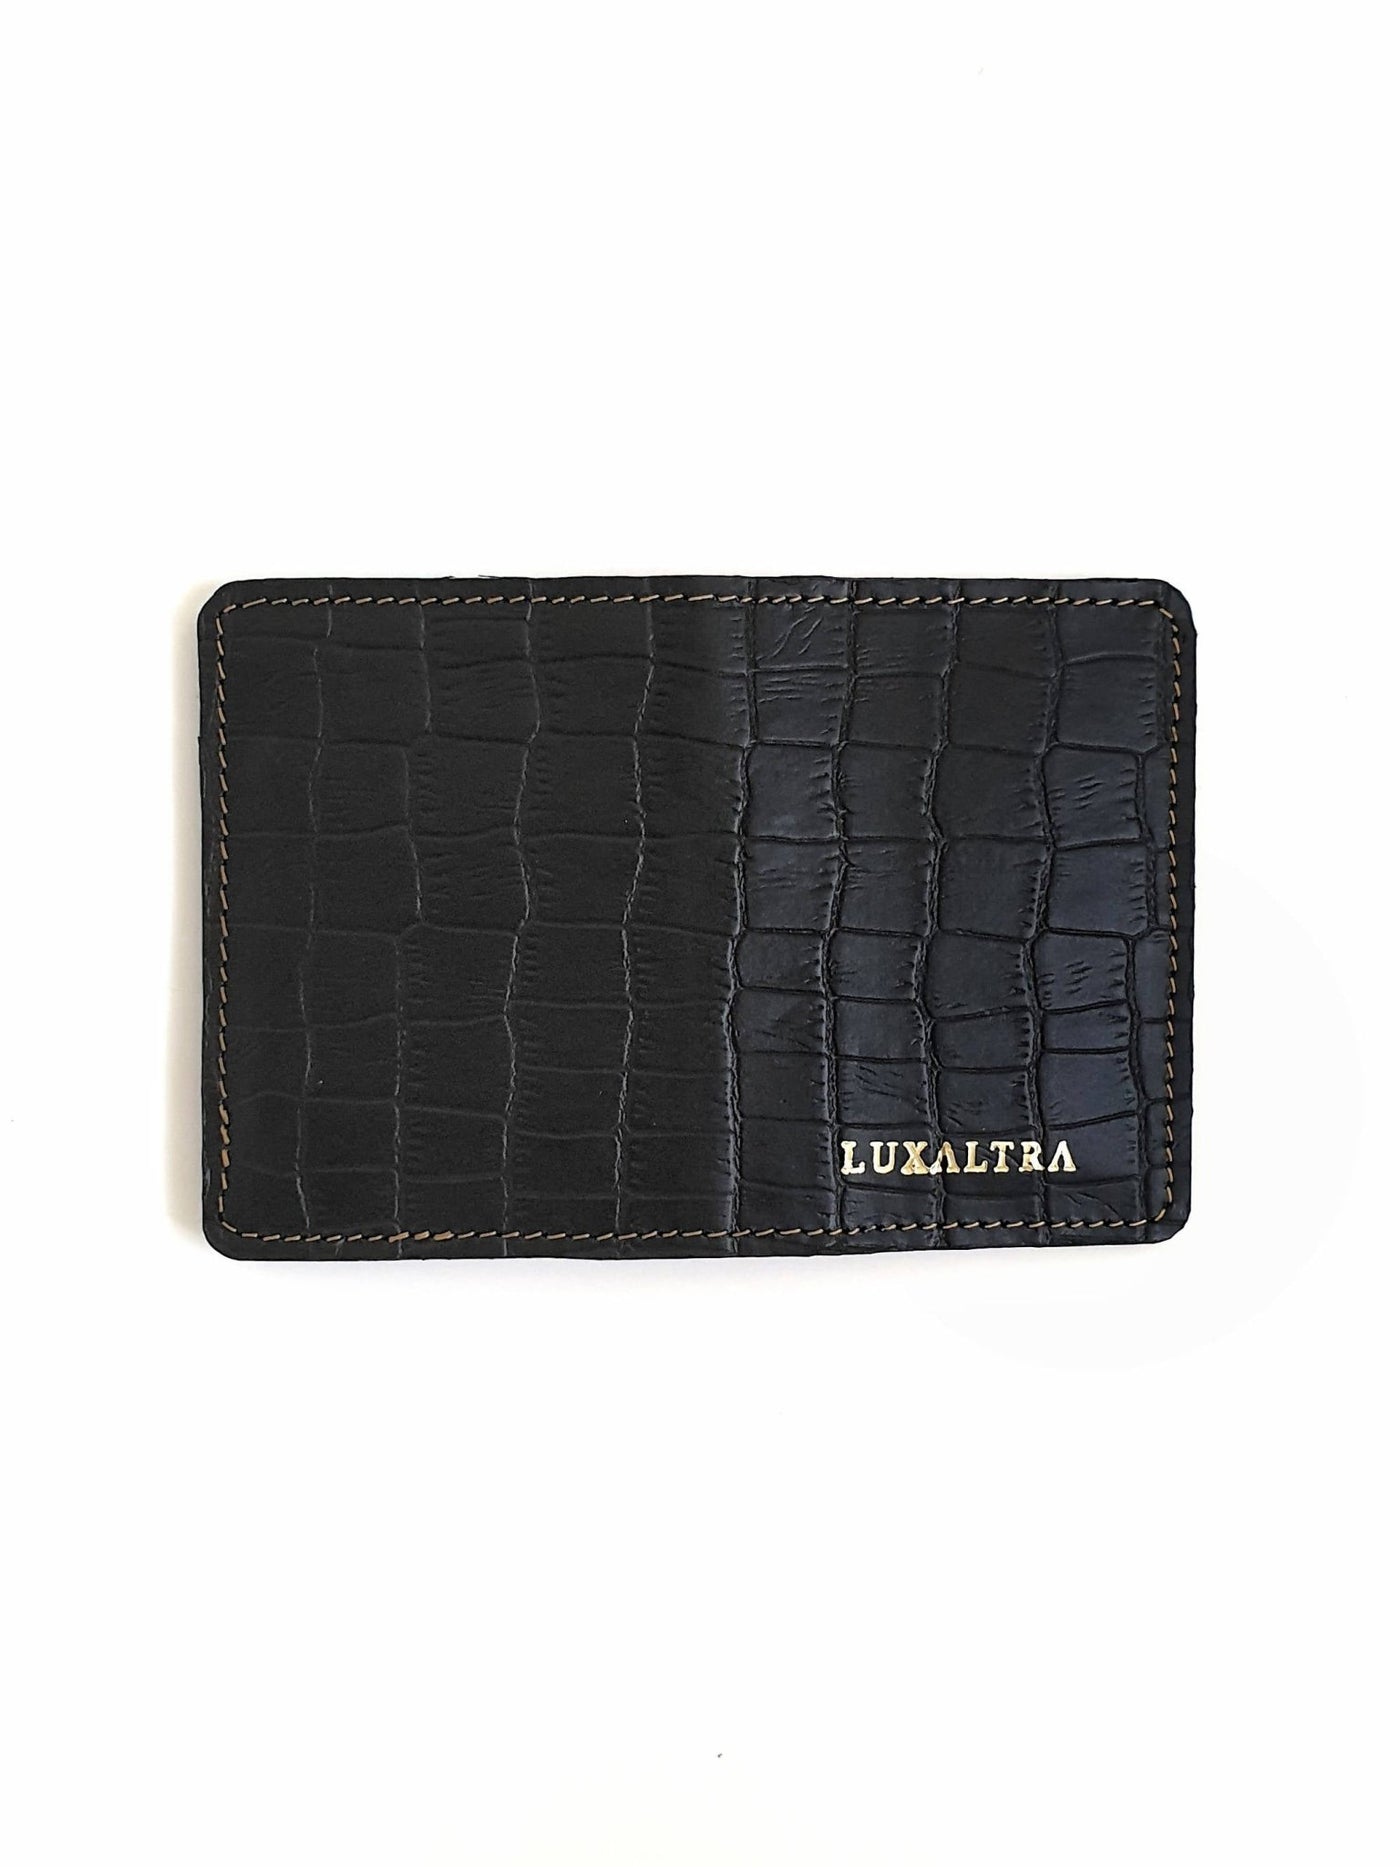 Luxaltra Pocket Bi-FOLD - Croc Black - Shop Zetu Kenya